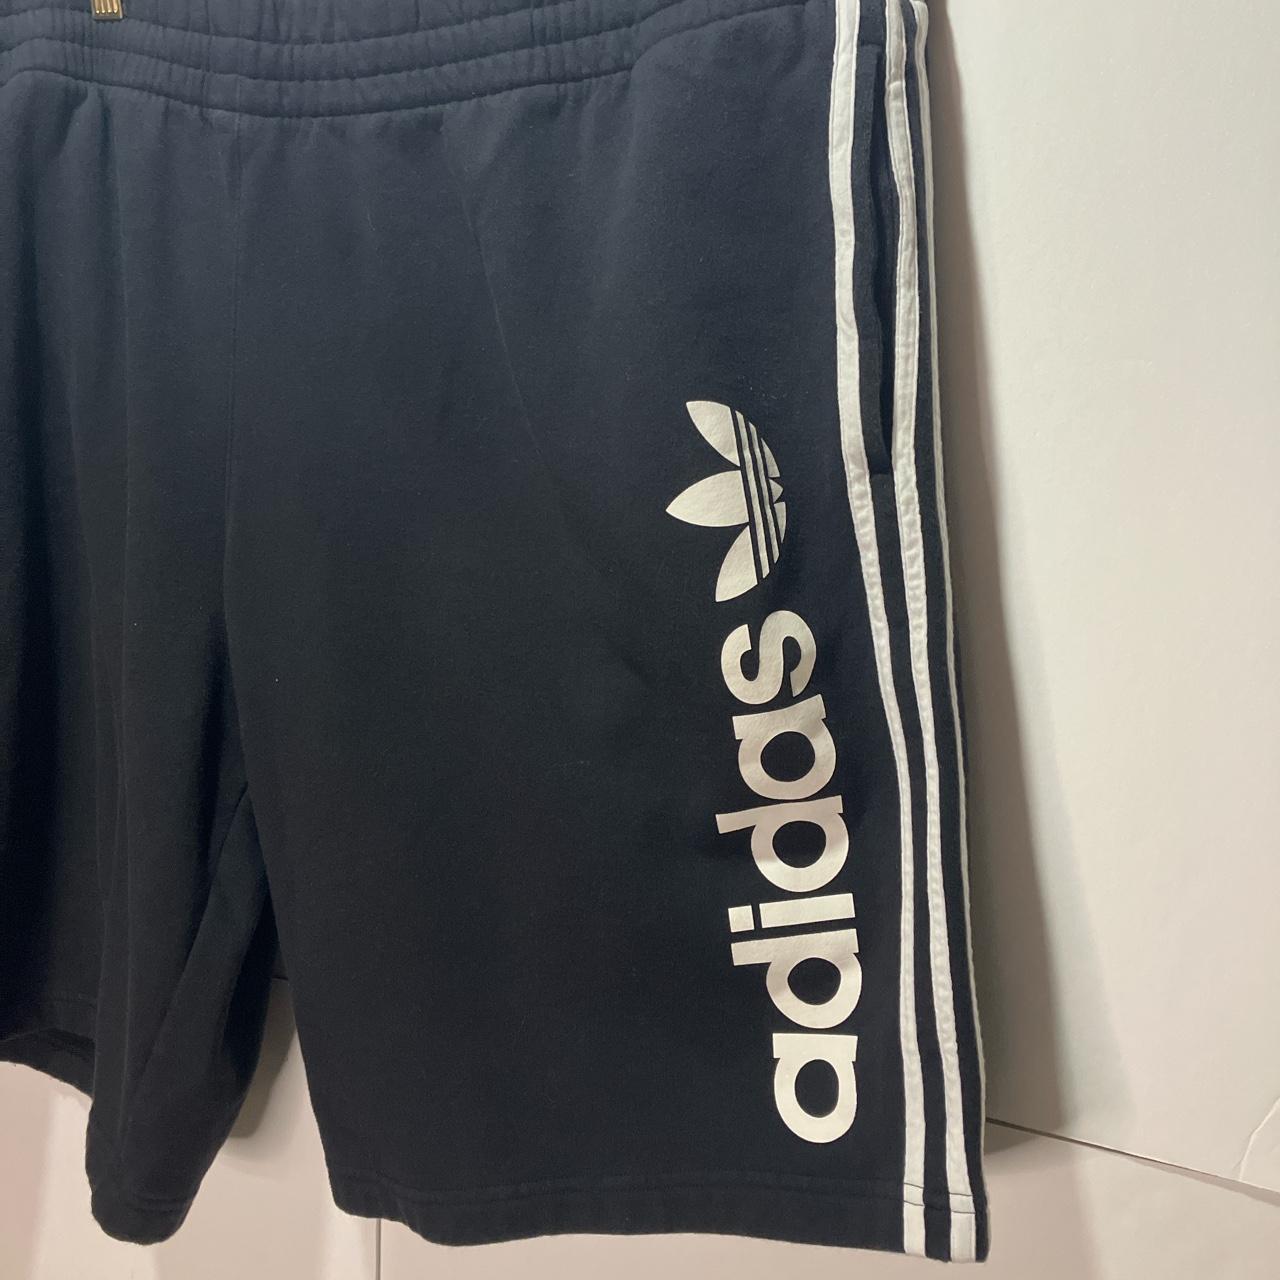 Adidas Originals Black athletic shorts with white - Depop